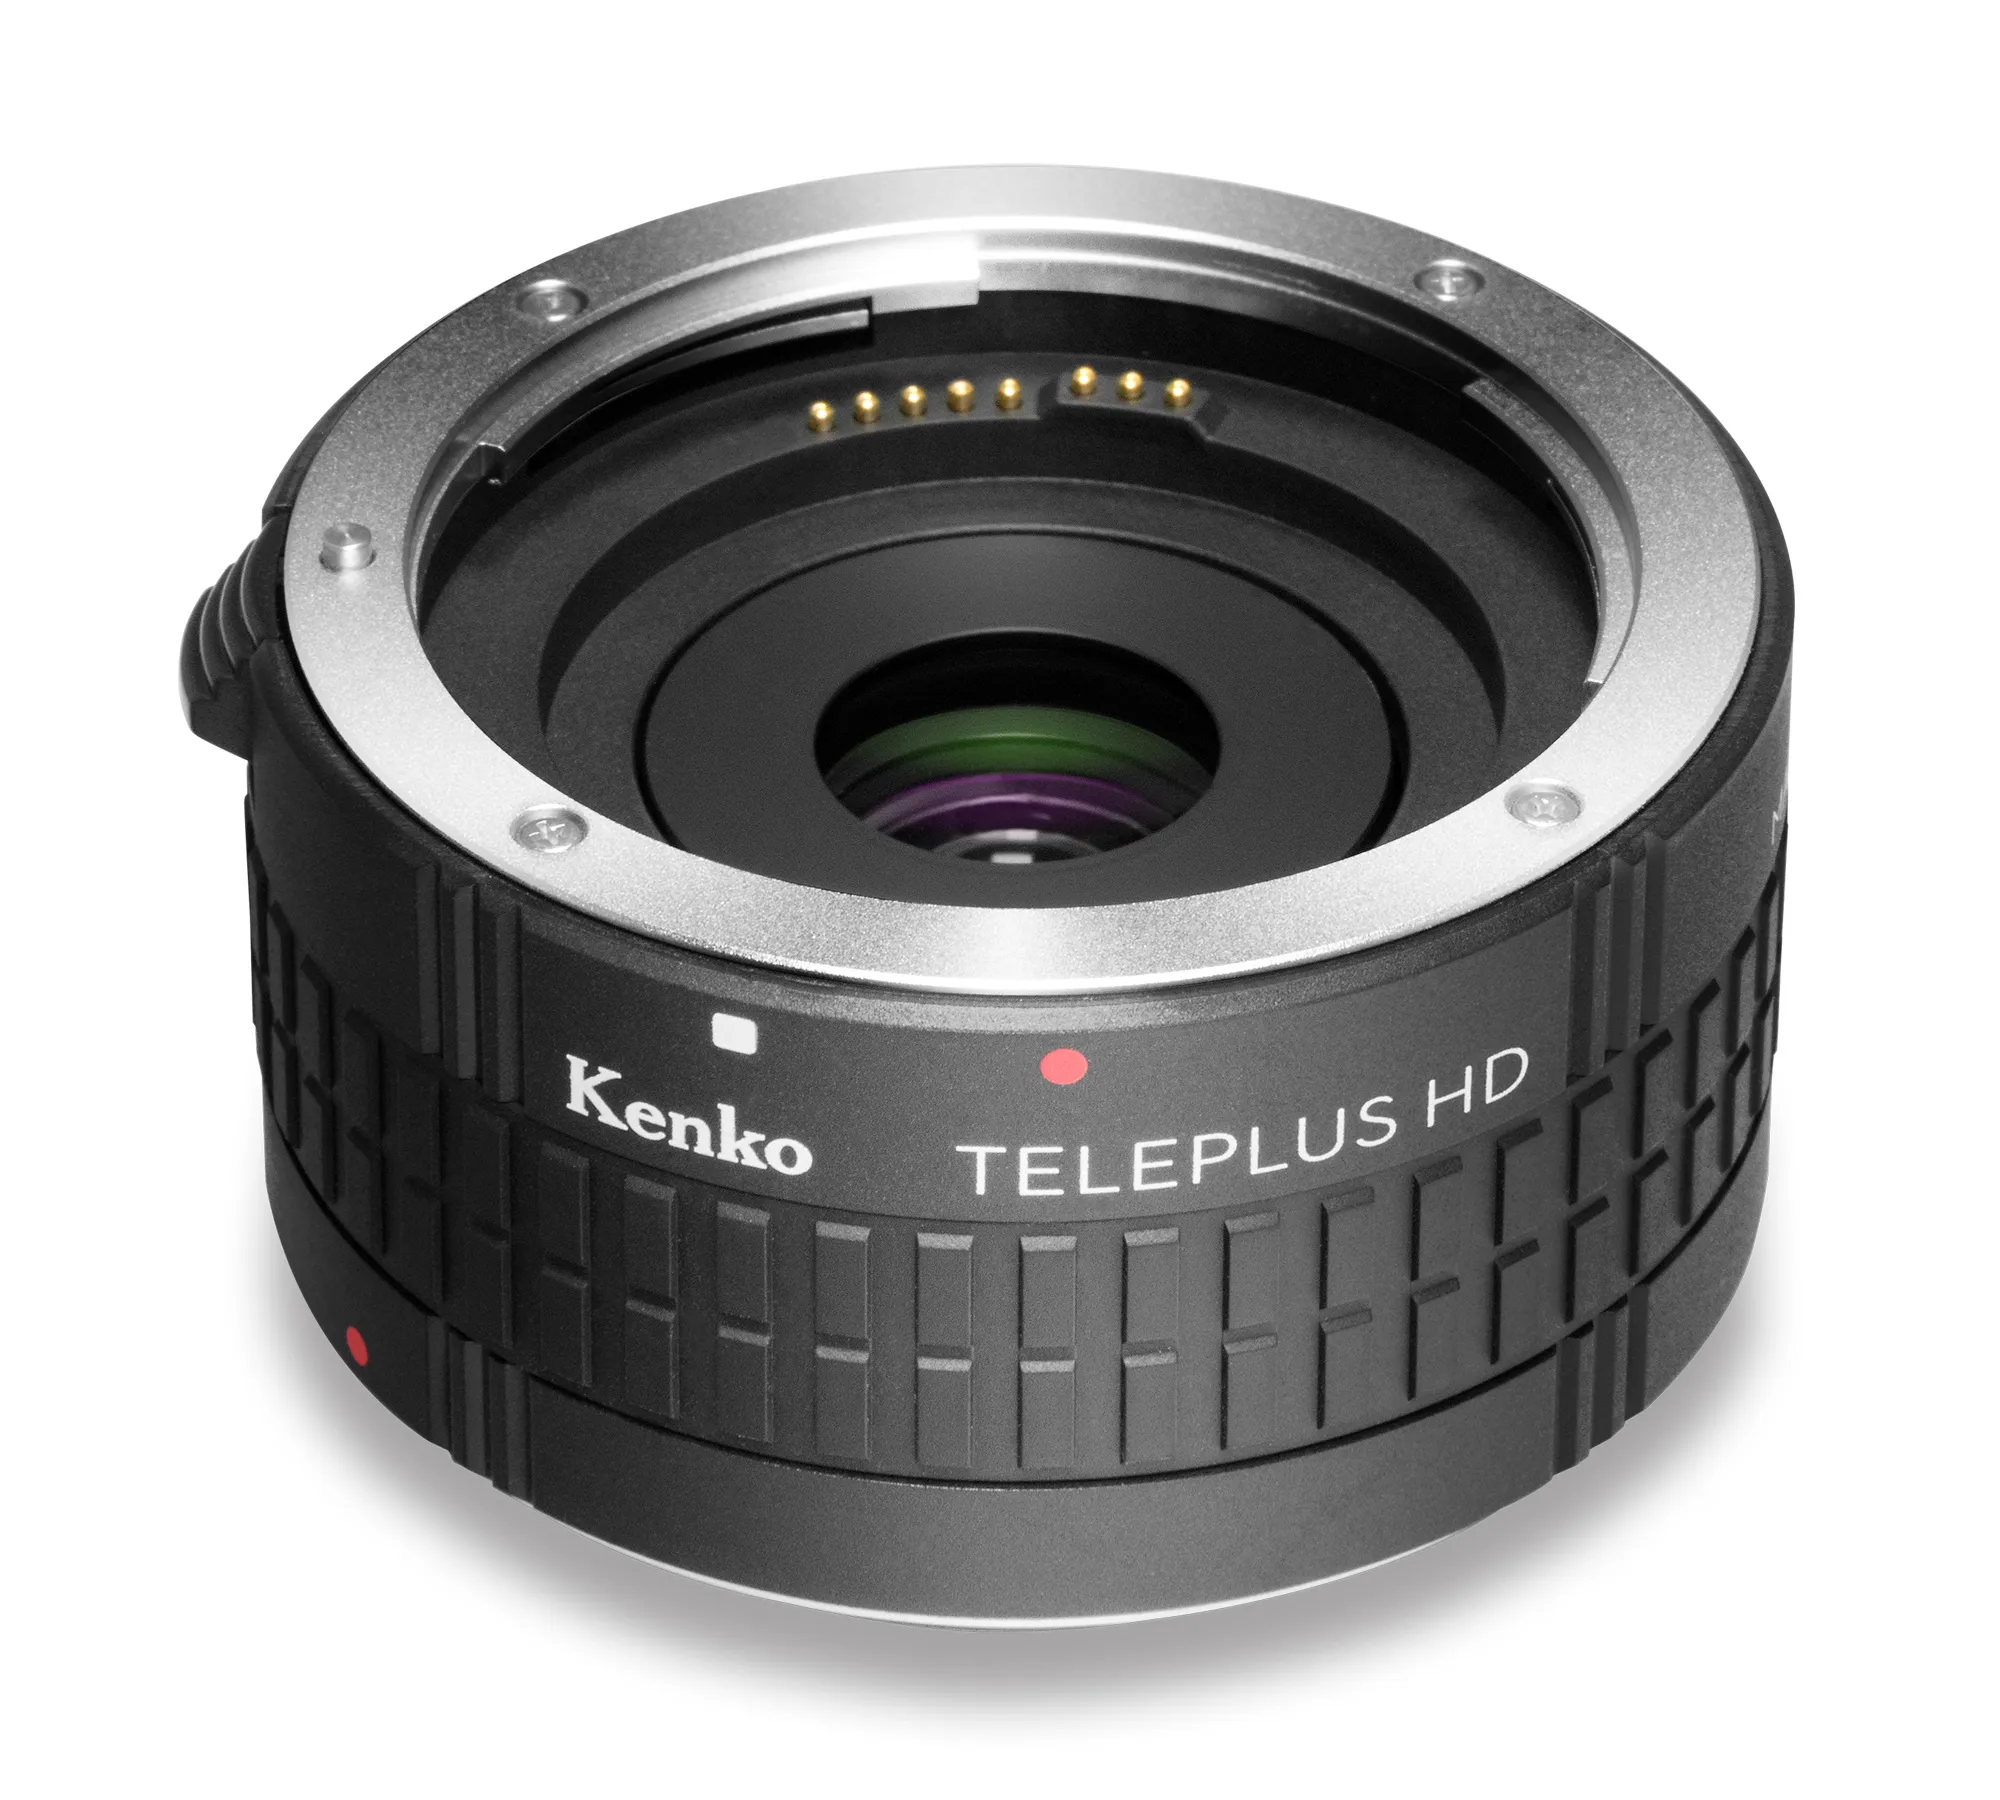 Kenko Teleplus HD DGX 2.0x Teleconverter for Nikon